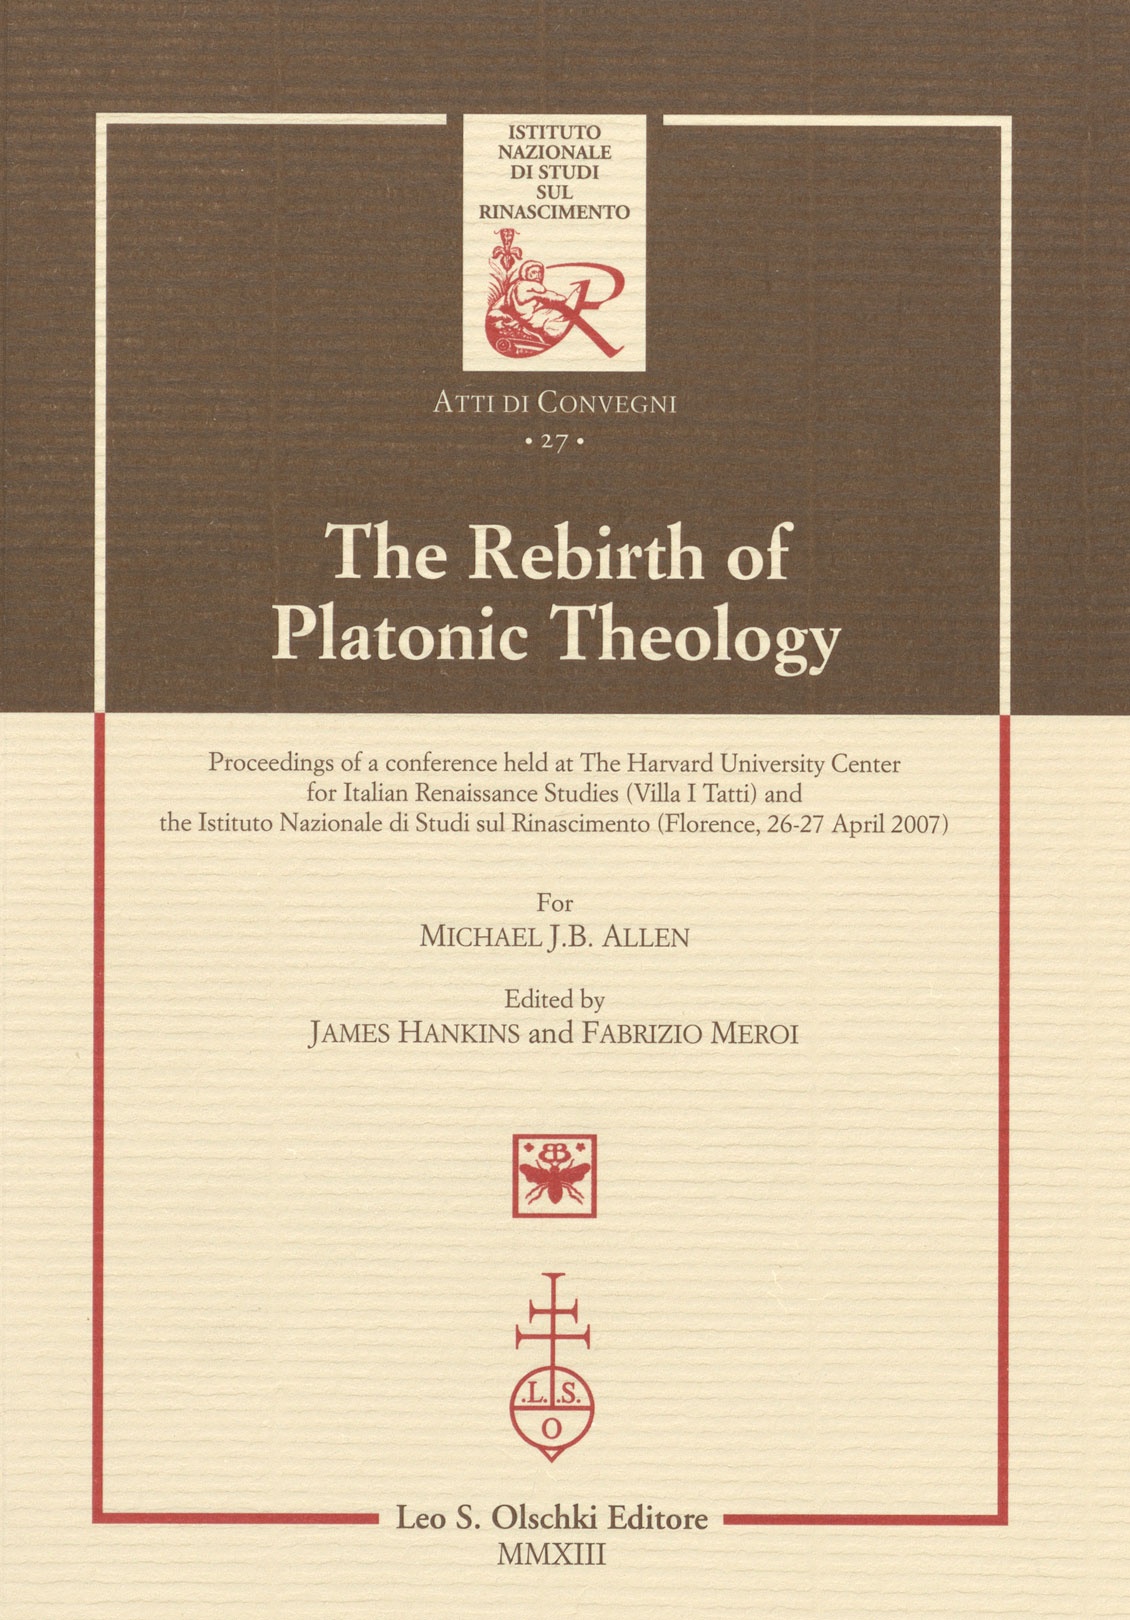 The Rebirth of Platonic Theology